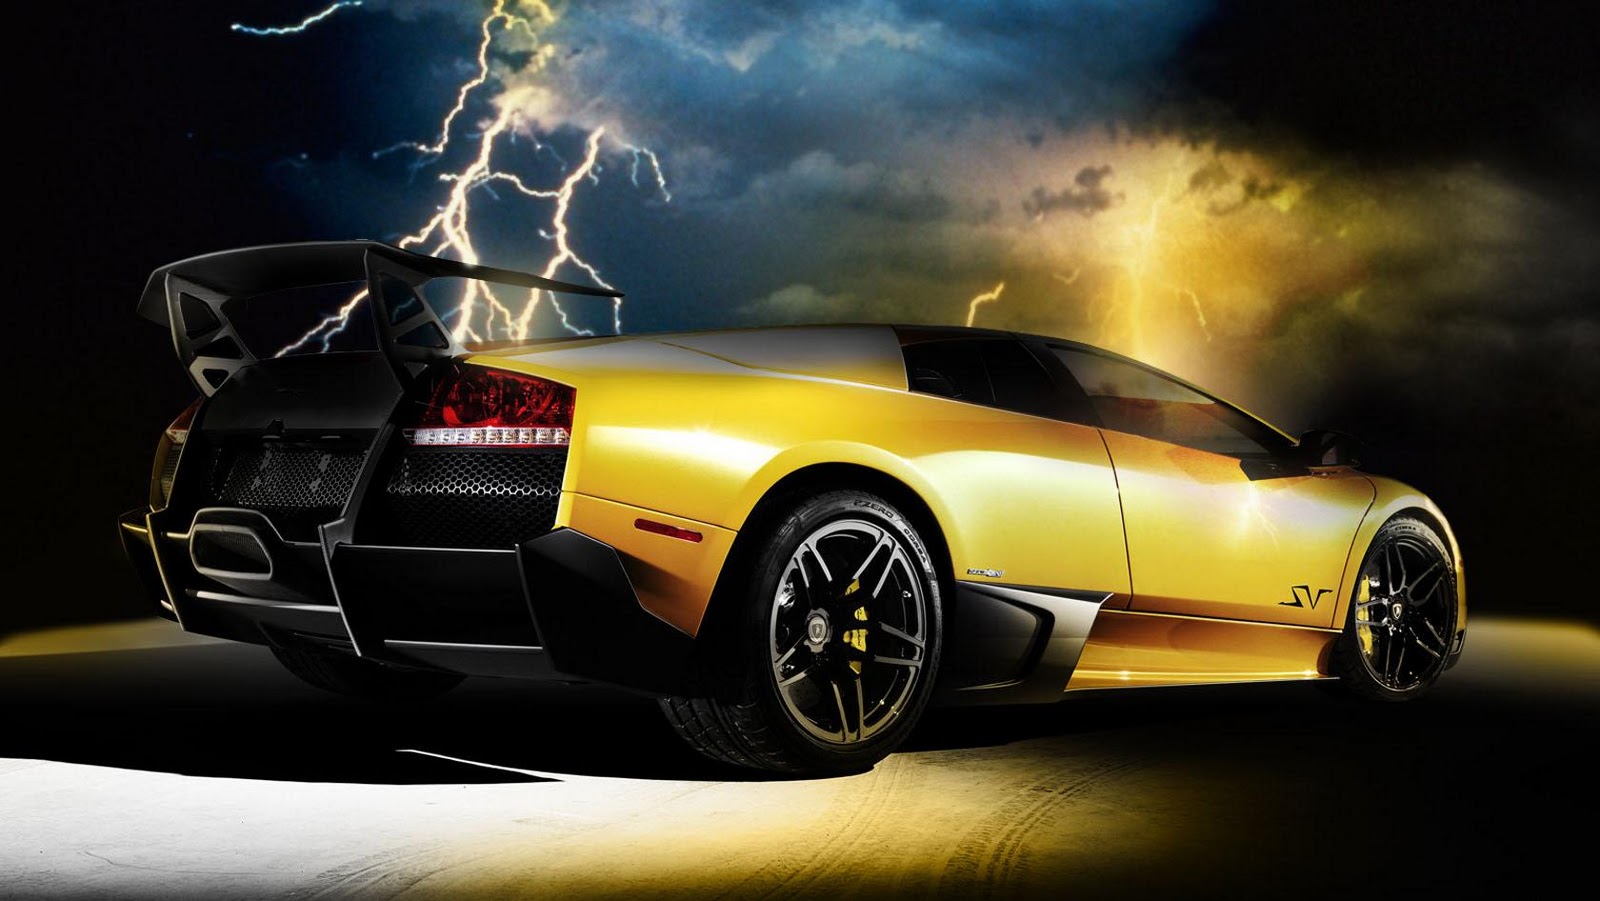 Best Lamborghini Wallpaper Group